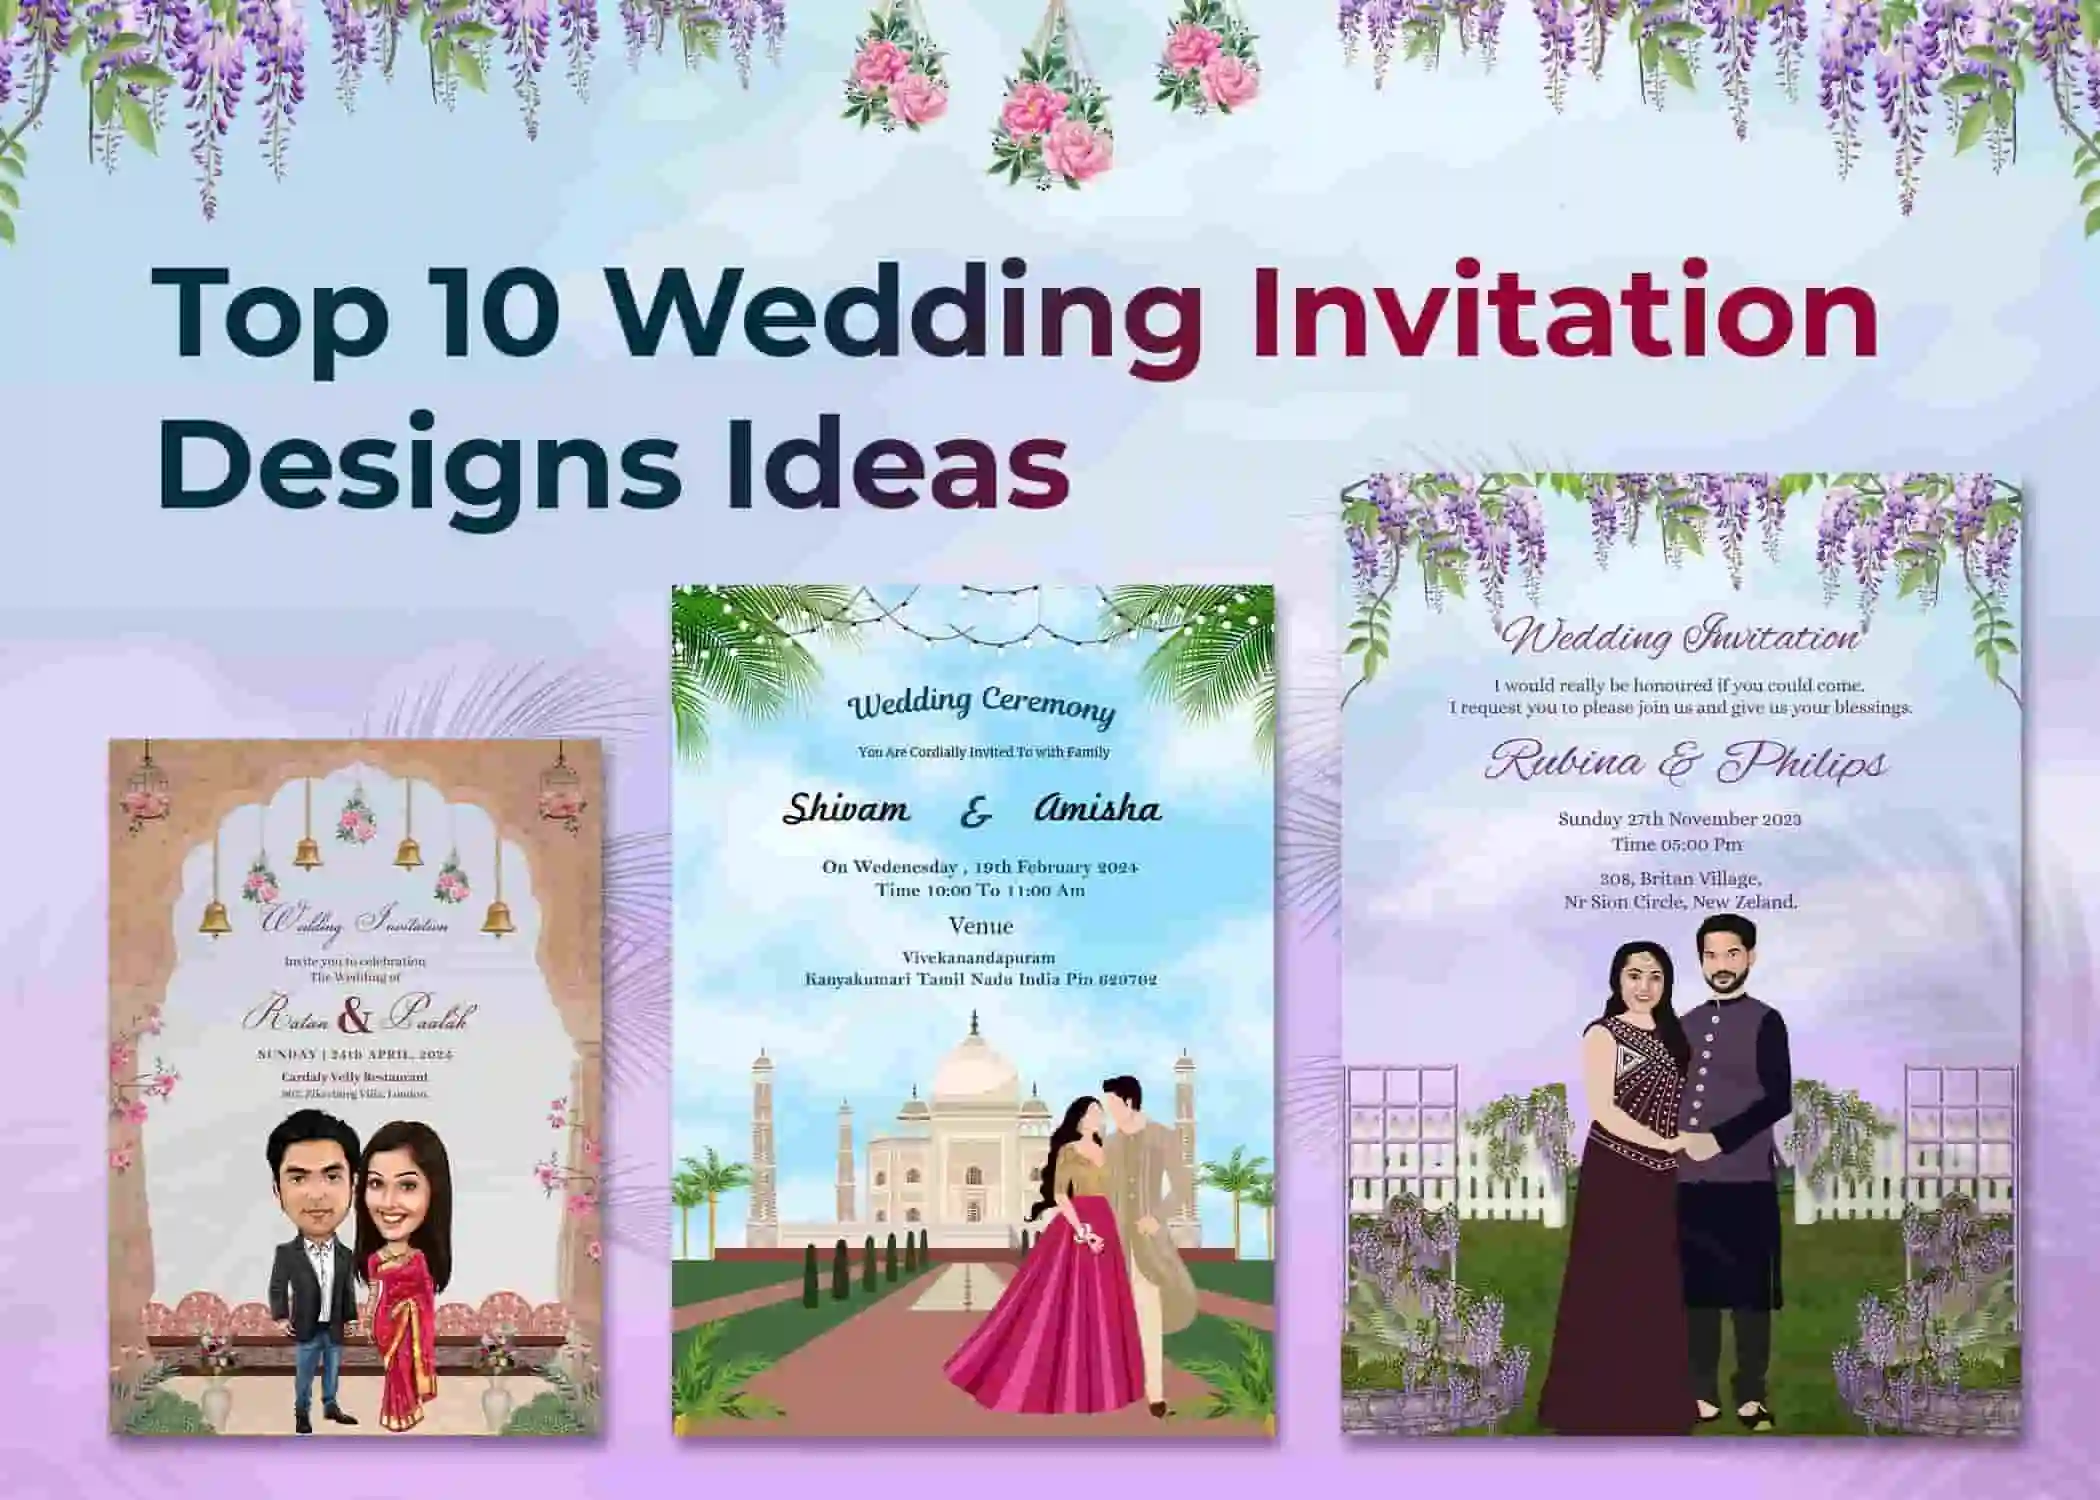 Top 10 Wedding Invitation Designs Ideas